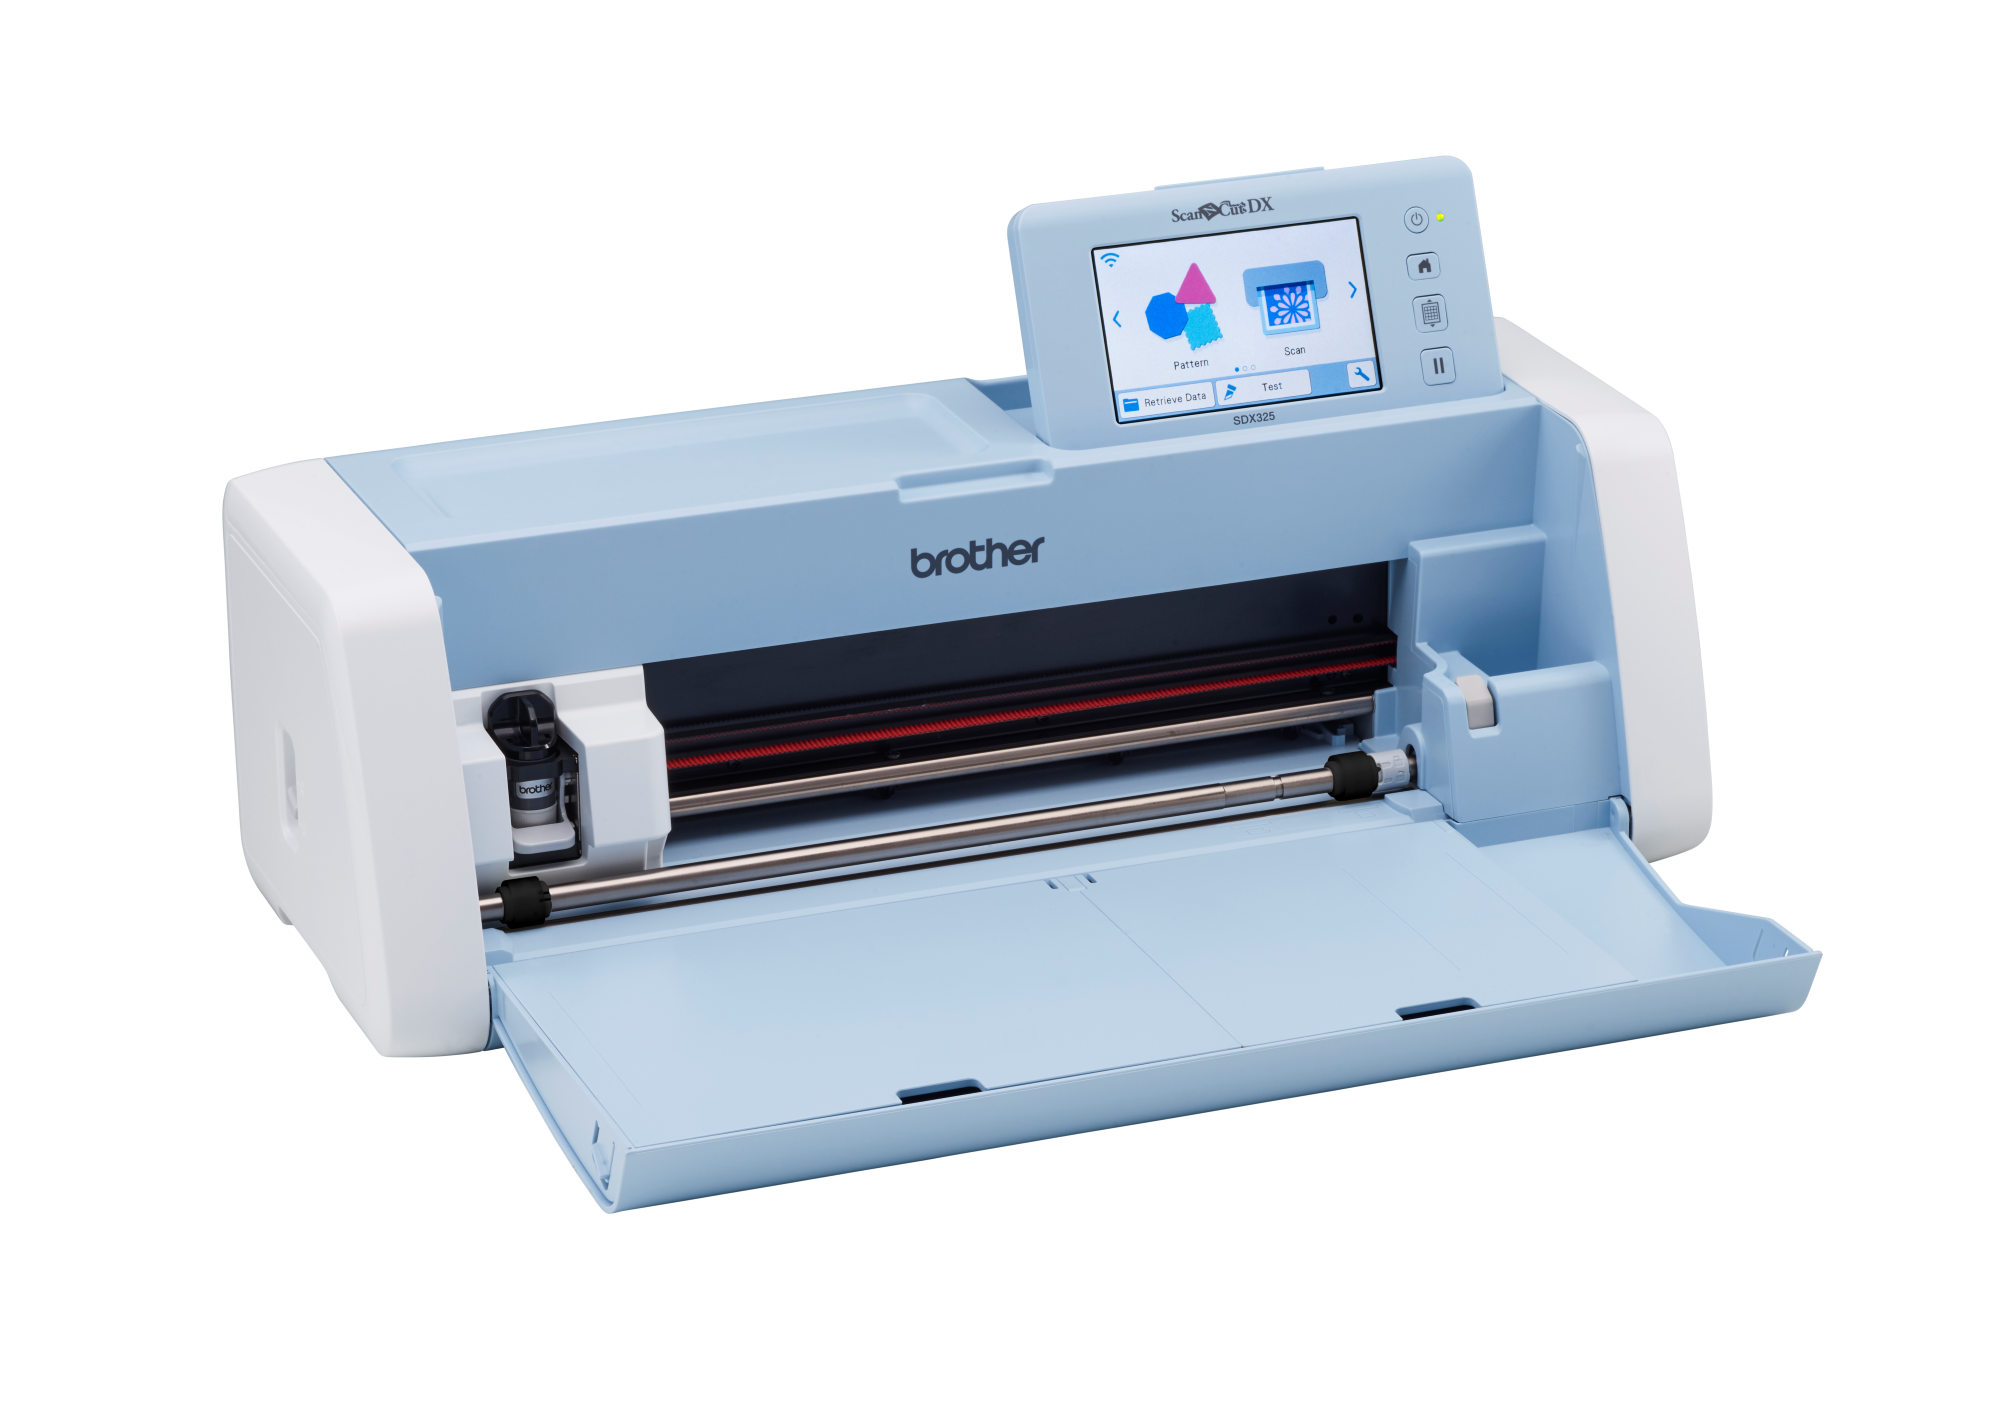 Brother SDX325 ScanNCut Craft Cutting Machine for Sale at World Weidner